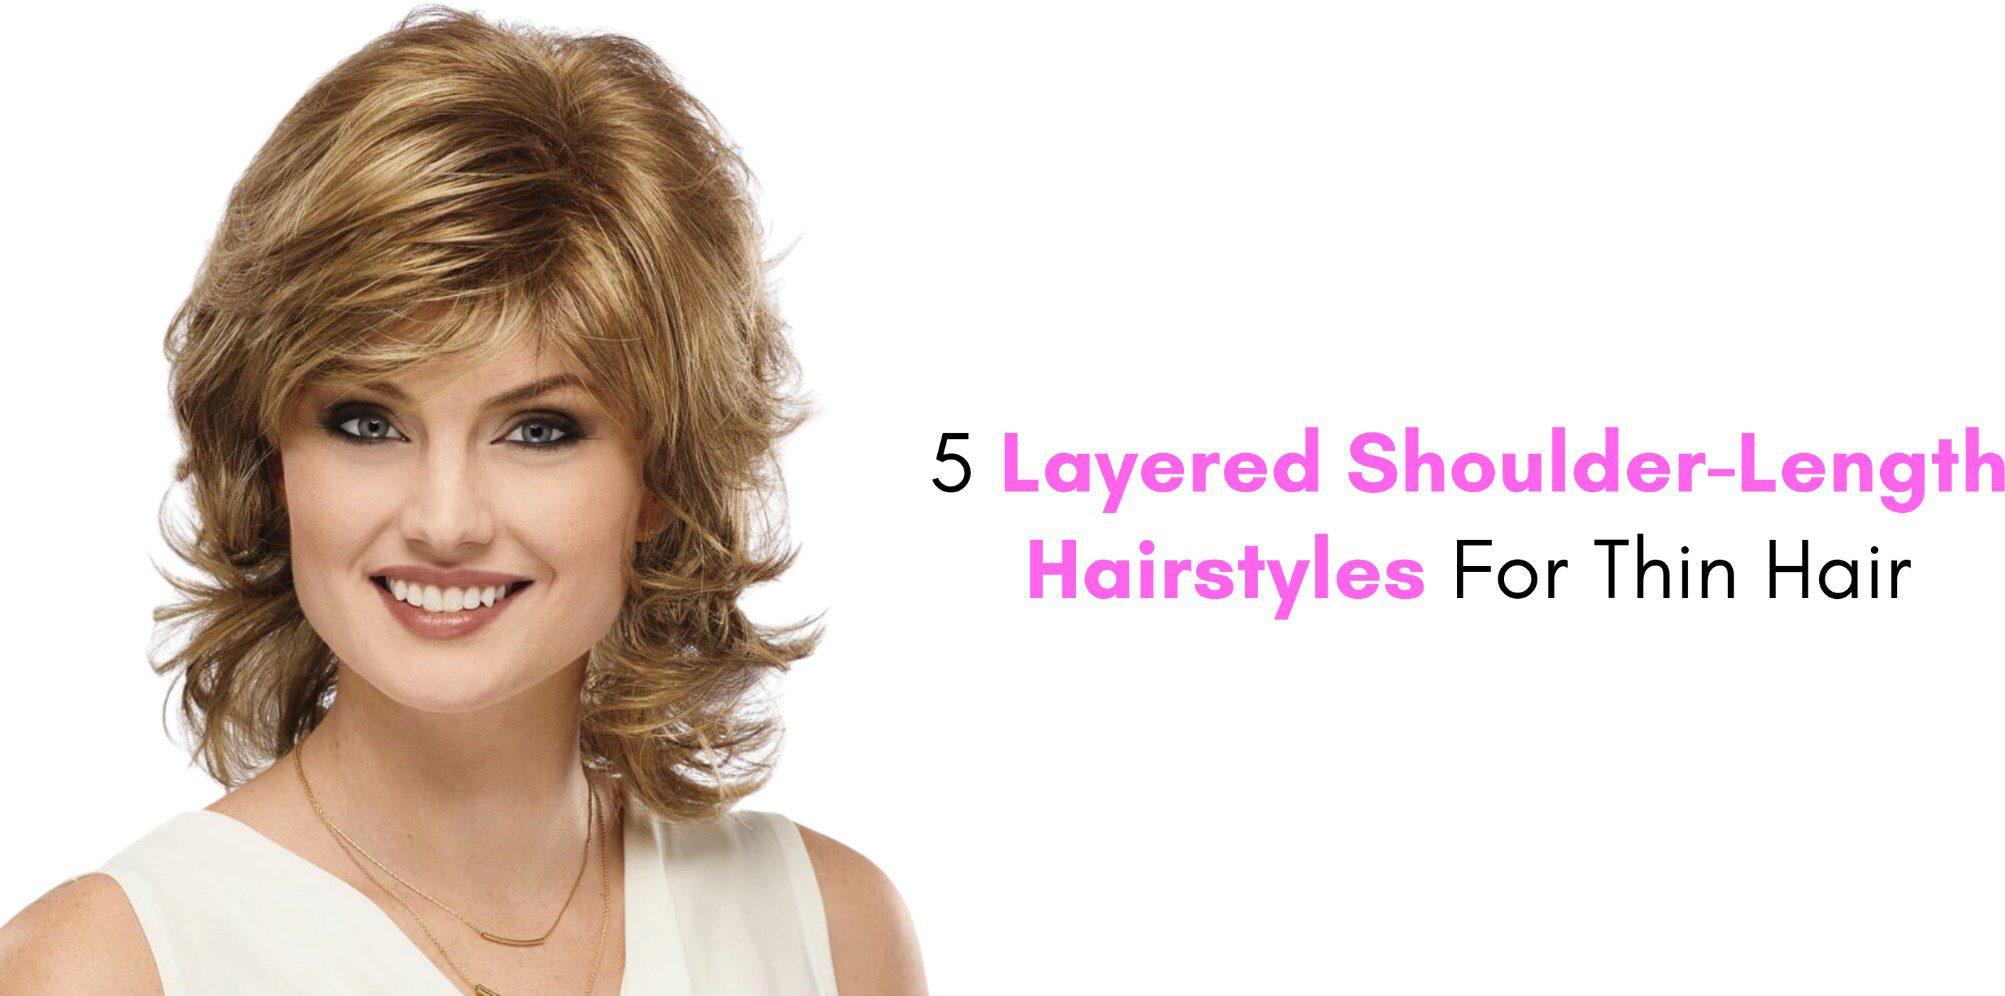 5 Layered Shoulder-Length Hairstyles For Thin Hair | Paula Young Blog